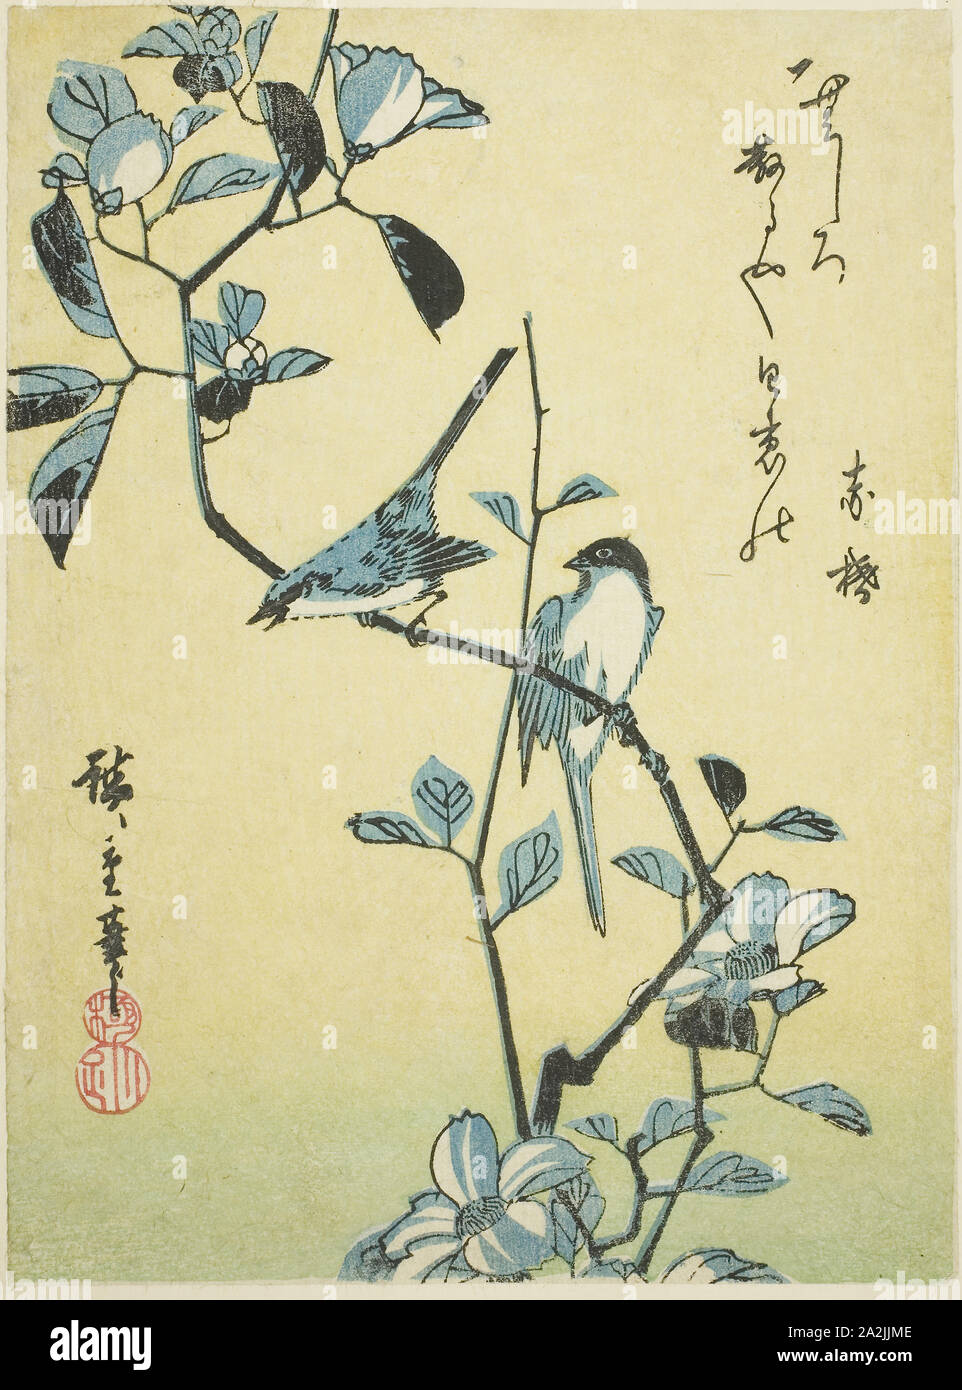 Las aves en la camelia, sucursal 1830s, Utagawa Hiroshige 歌川 広重, Japonés, 1797-1858, Japón, grabado en madera de color, chuban, 22,8 x 17 cm (9 x 6 5/8 pulg. Foto de stock